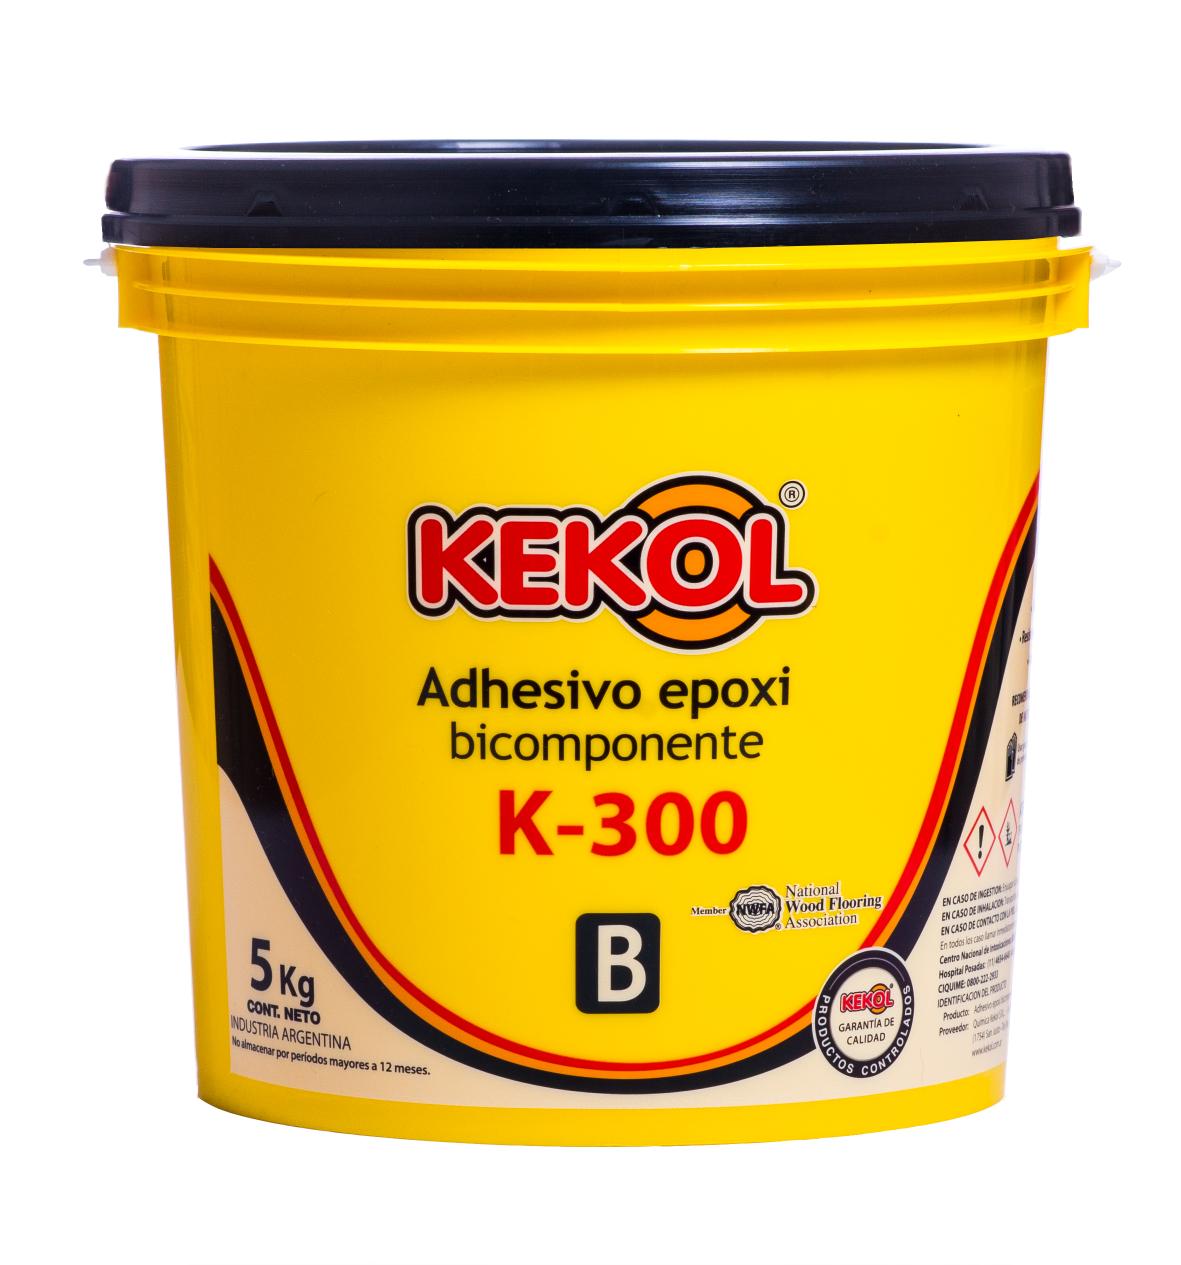 Adhesivo bicomponente para pisos de madera Kekol K-300